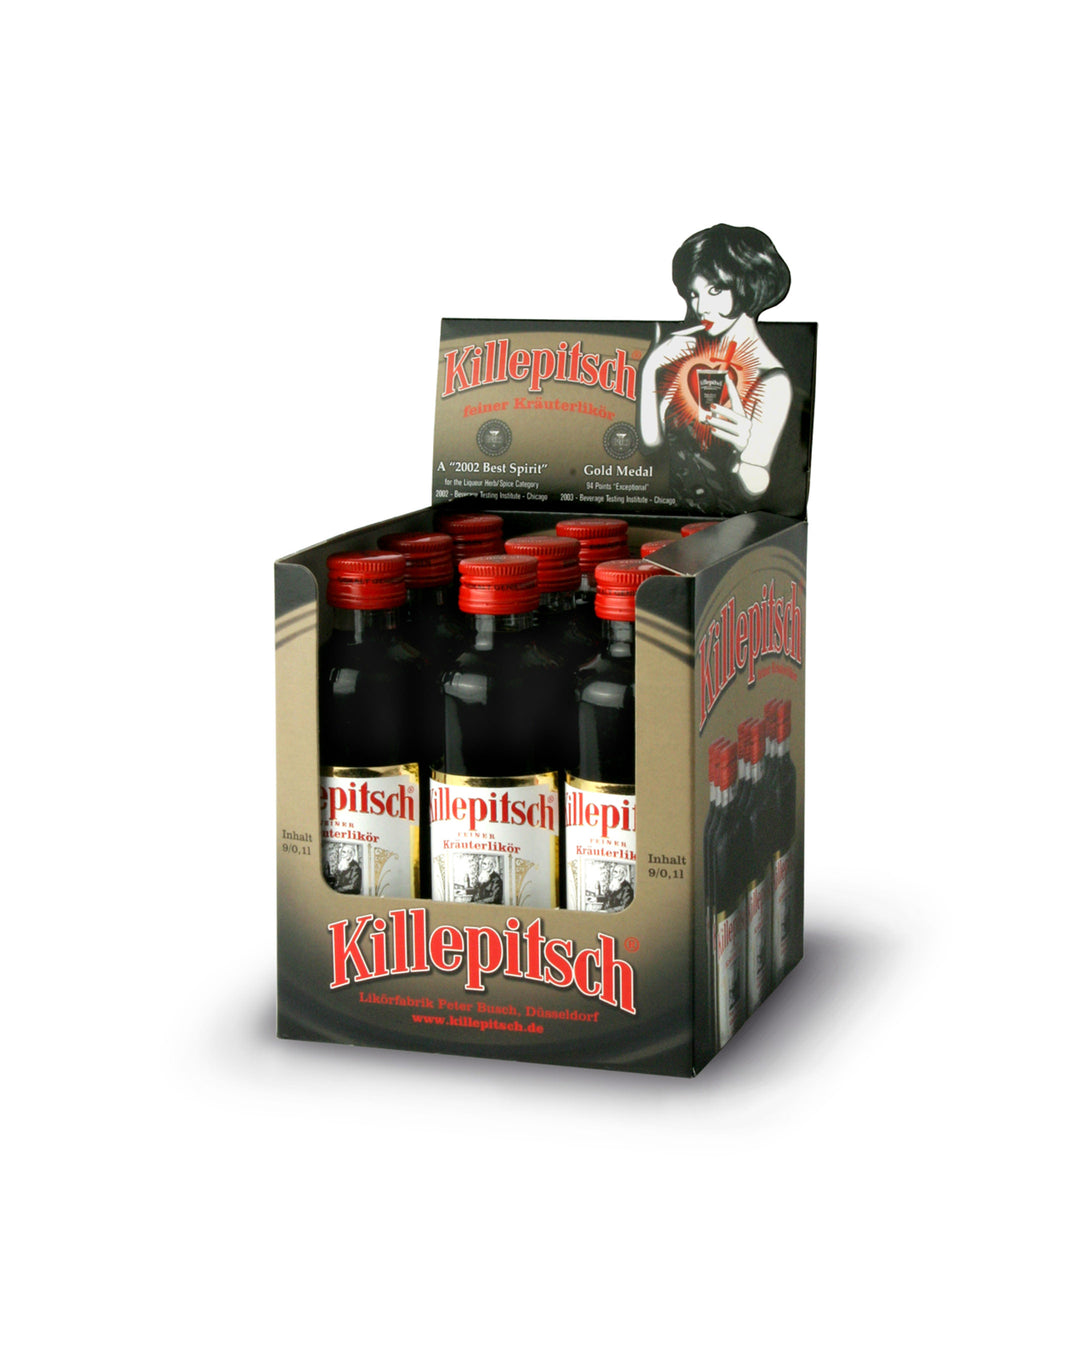 Killepitsch 42% - Premium-Kräuterlikör Display 9 x 100ml